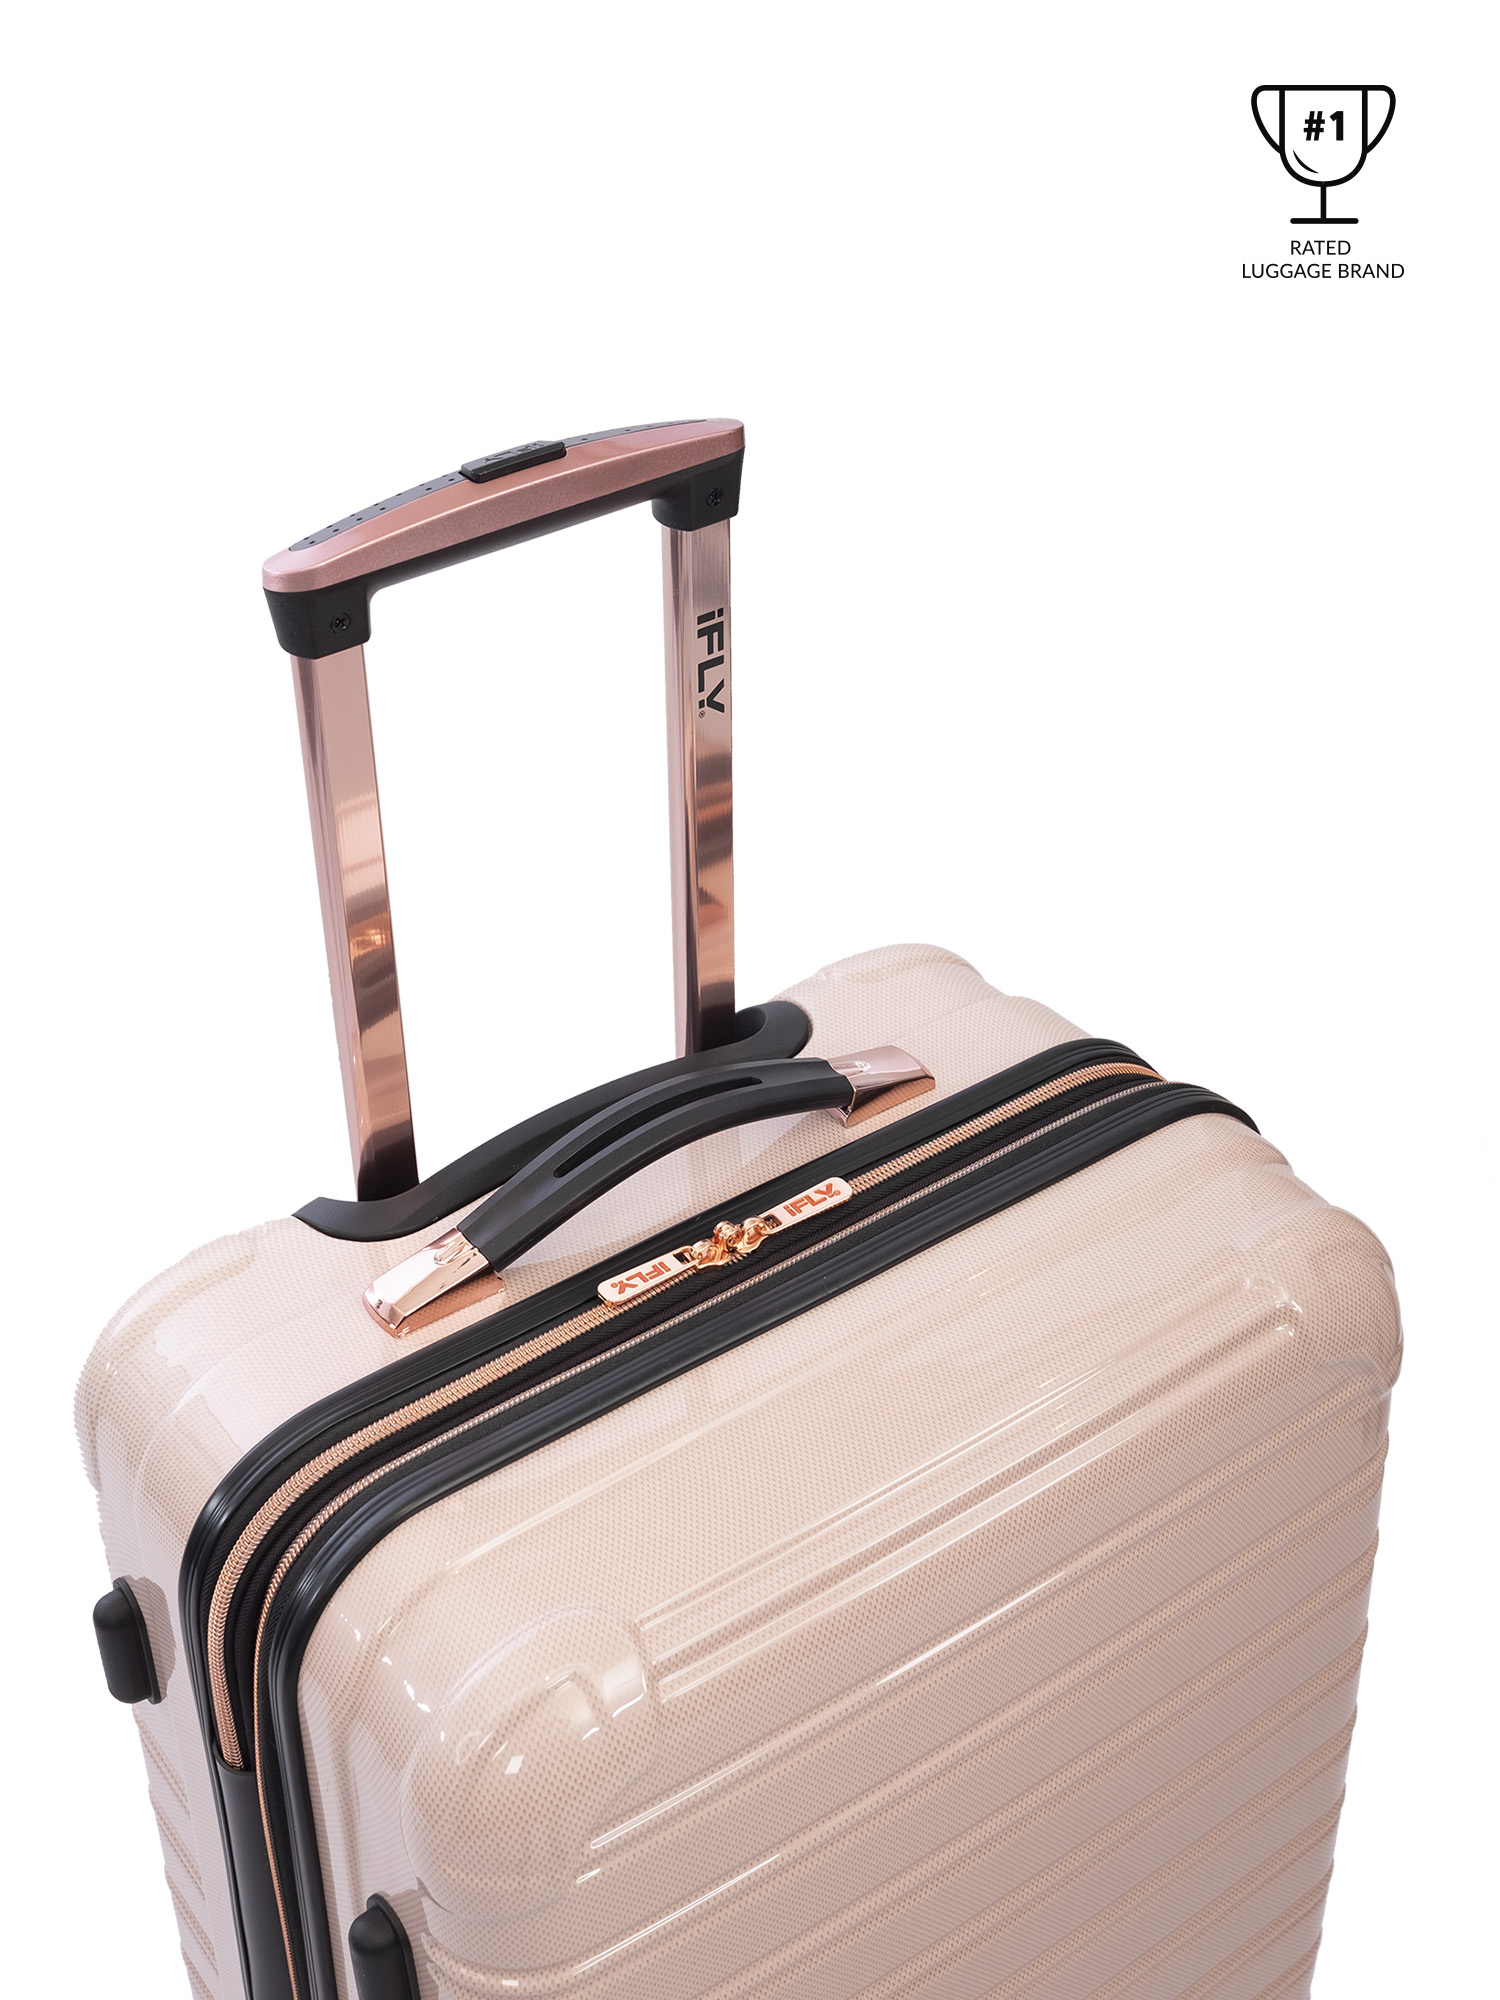 iFLY Hardside Luggage Fibertech 20 Inch Carry-on, Blush/Rose Gold - image 5 of 8